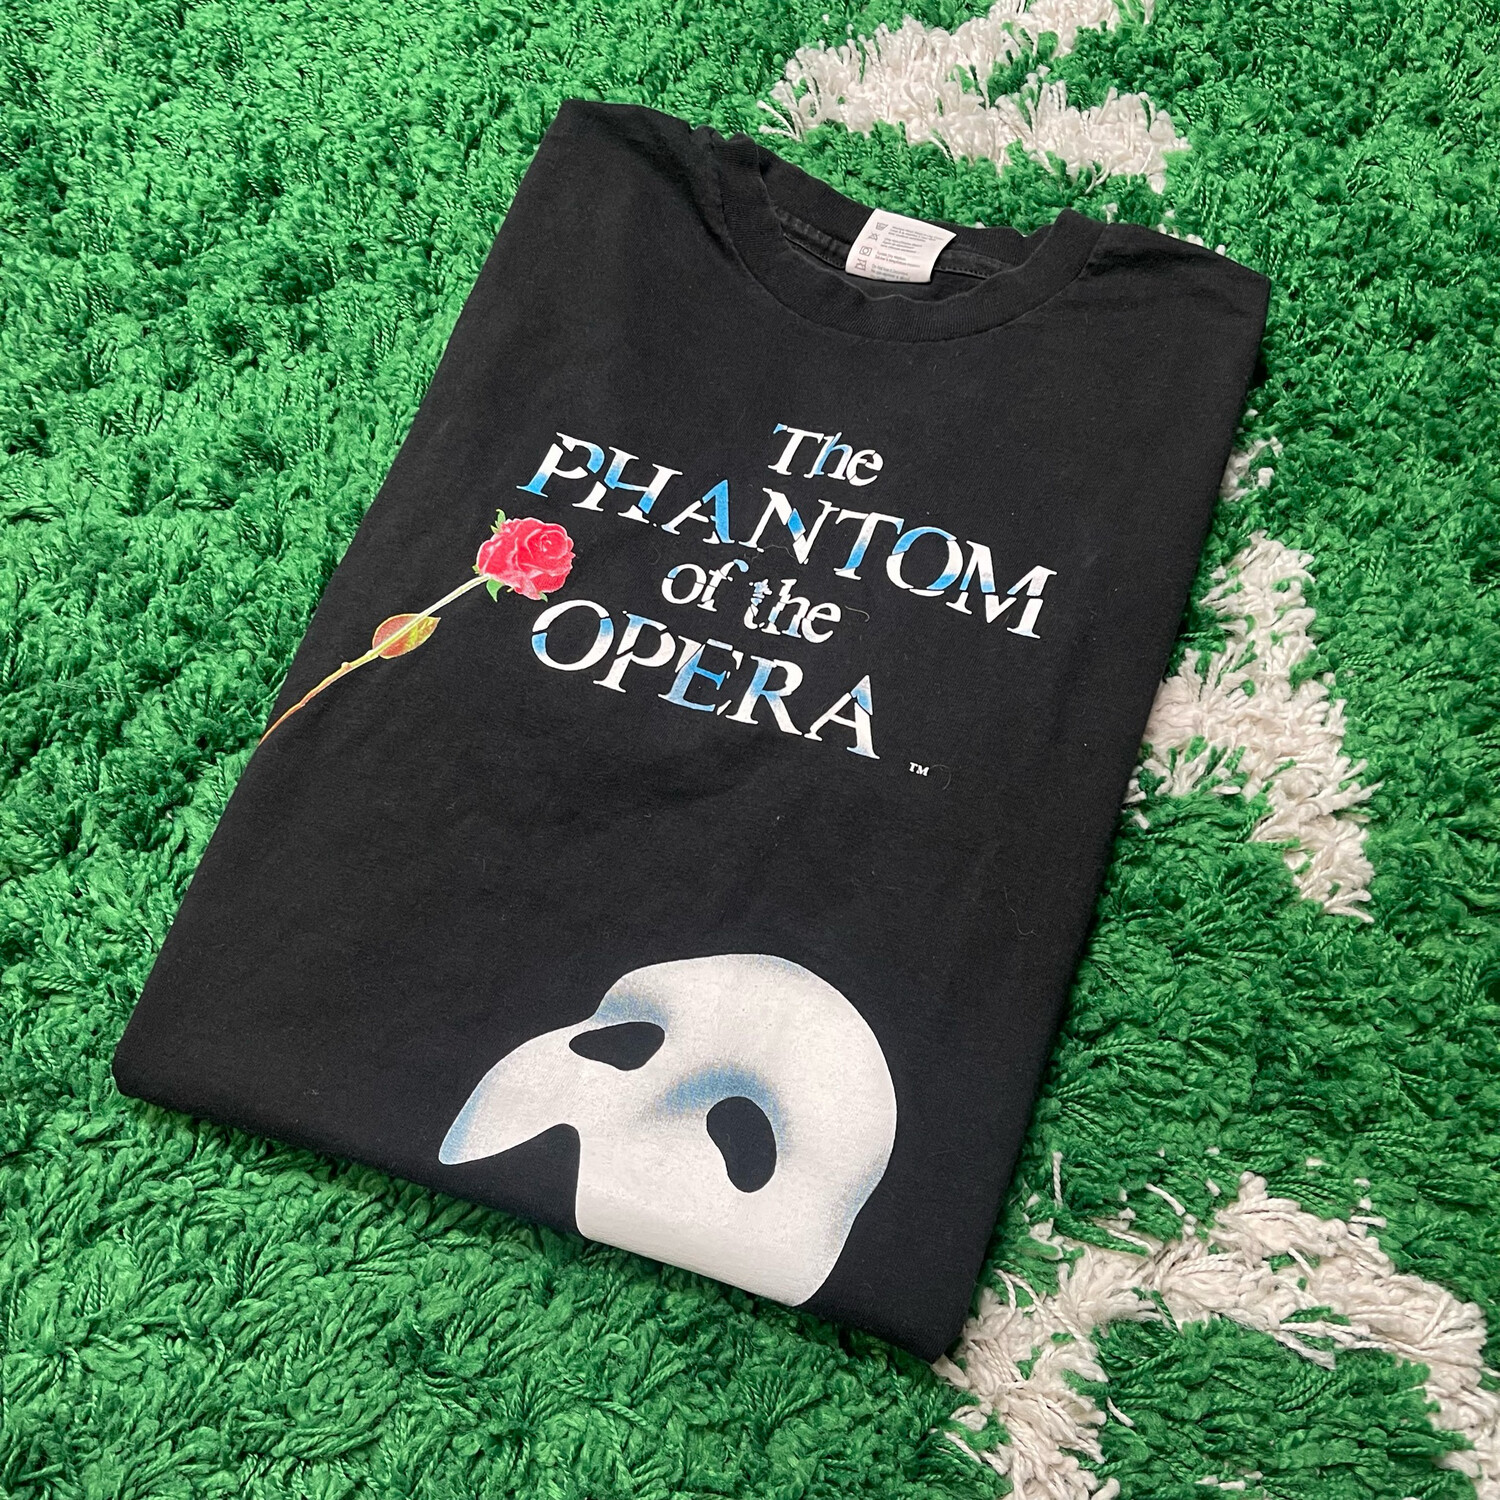 The Phantom Of The Opera Tee Size Large